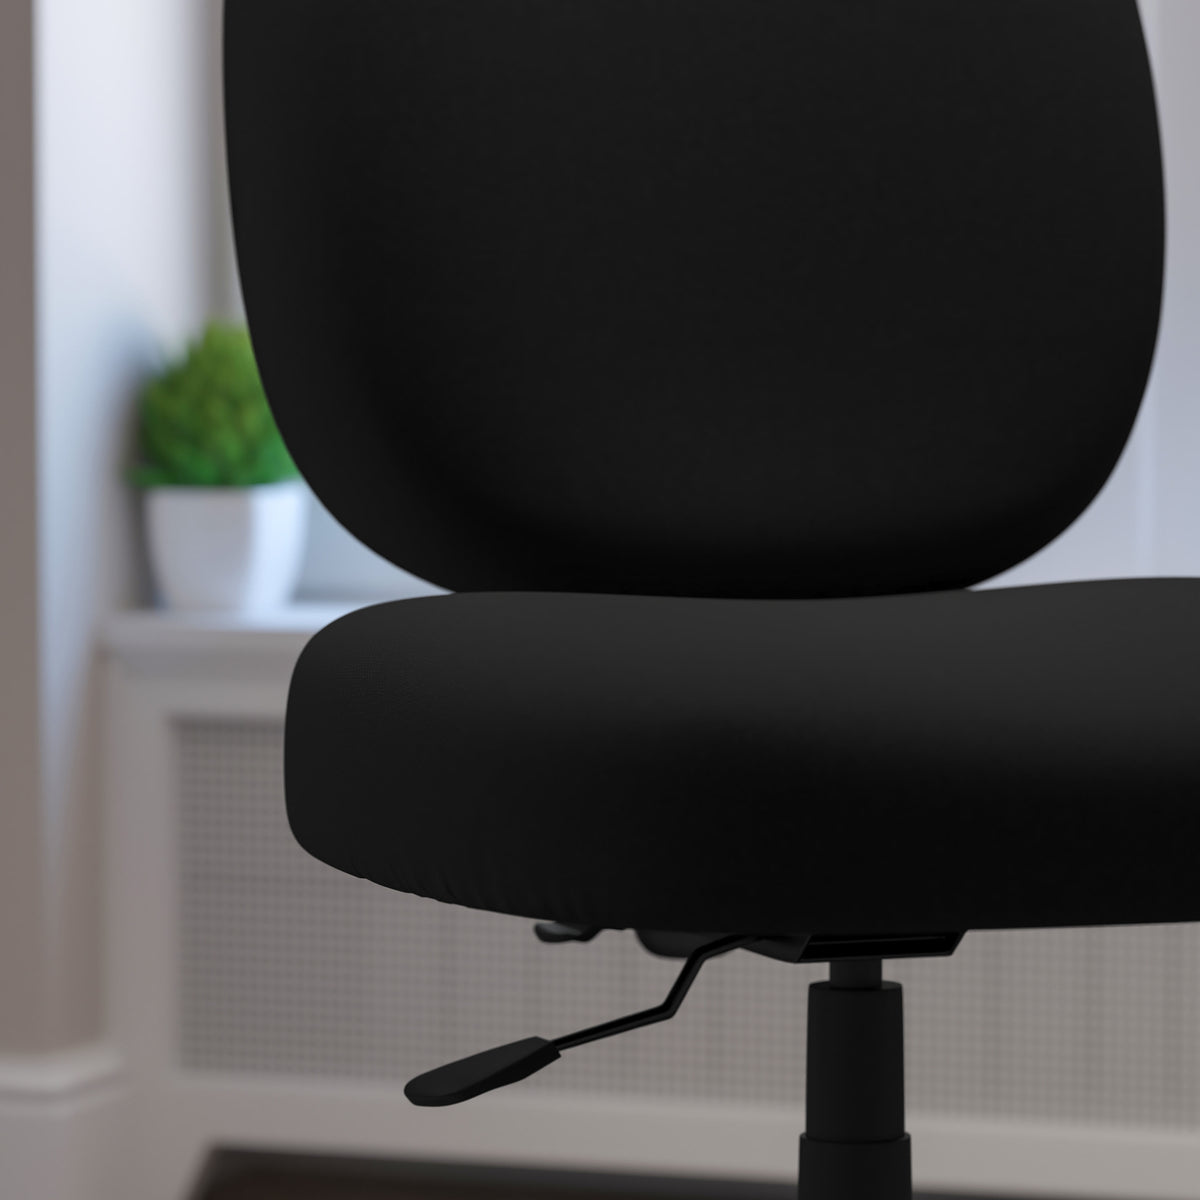 Big & Tall 400 lb. Rated High Back Black Fabric Swivel Ergonomic Office Chair